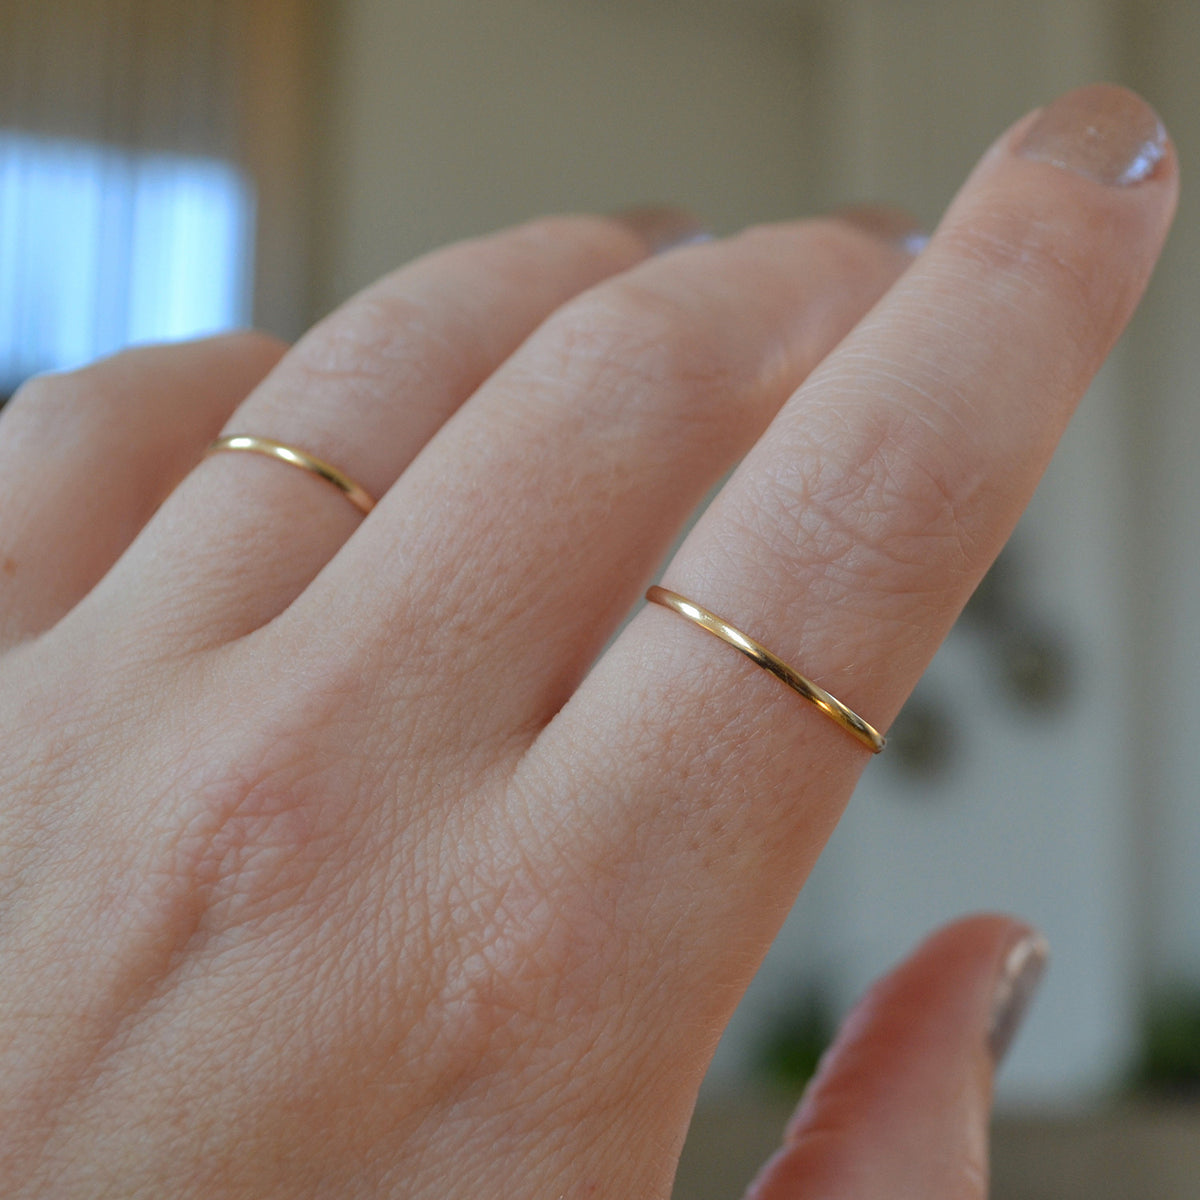 Thin 14K Gold Ring